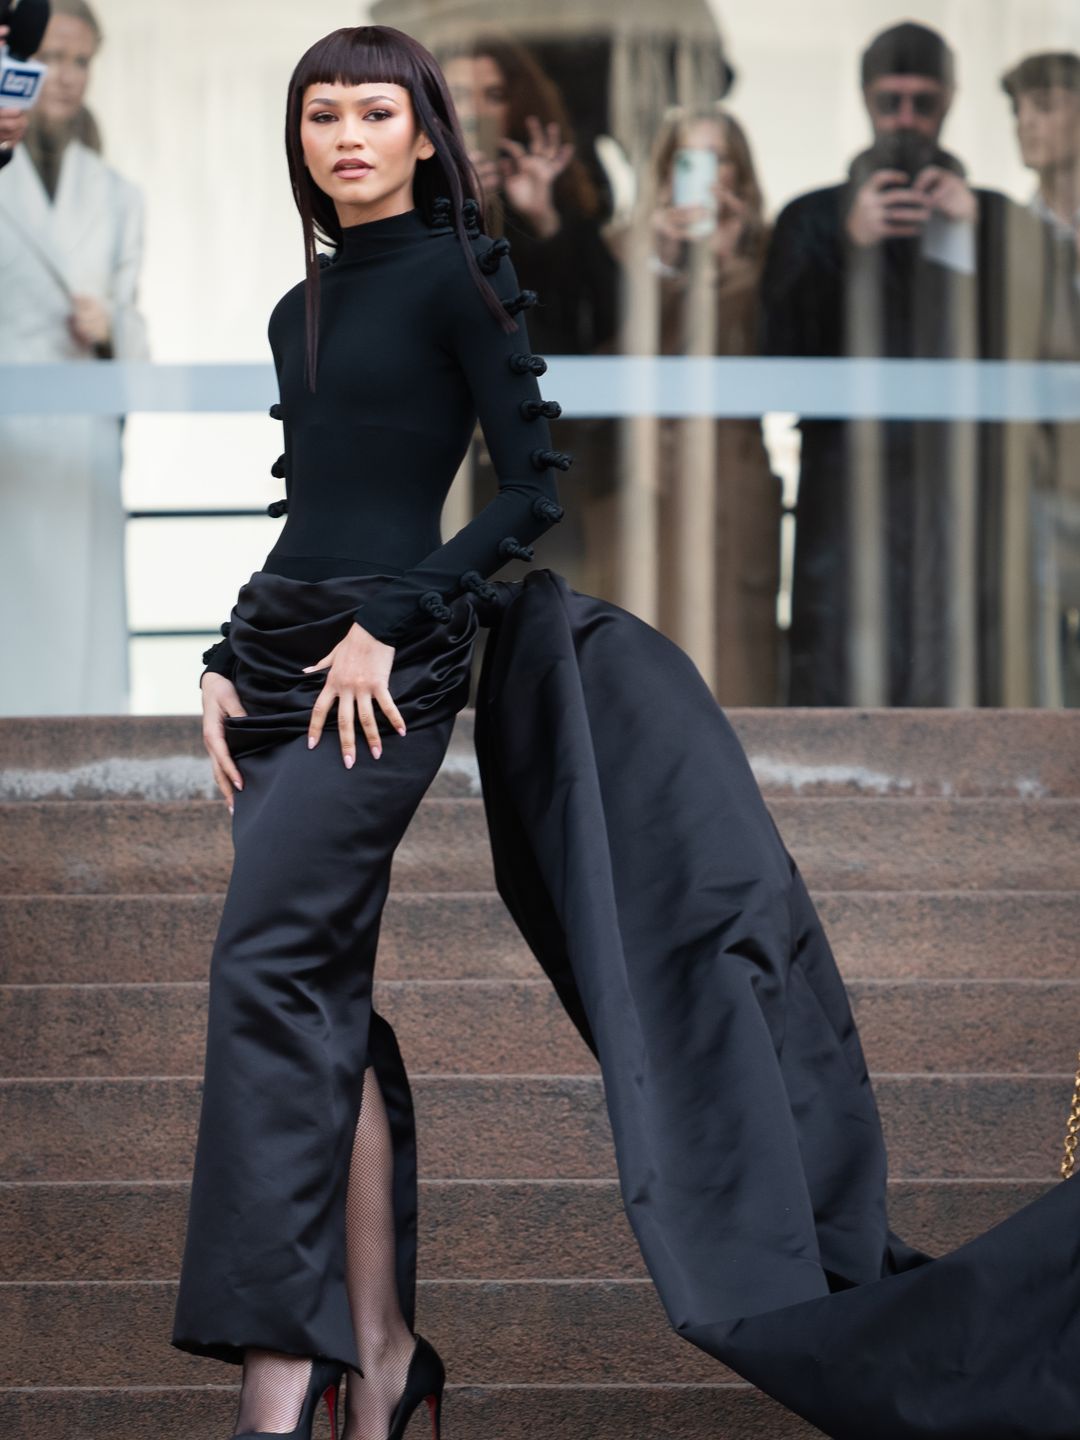 Zendaya wearing a black top and skirt by Schiaparelli and fishnet socks 